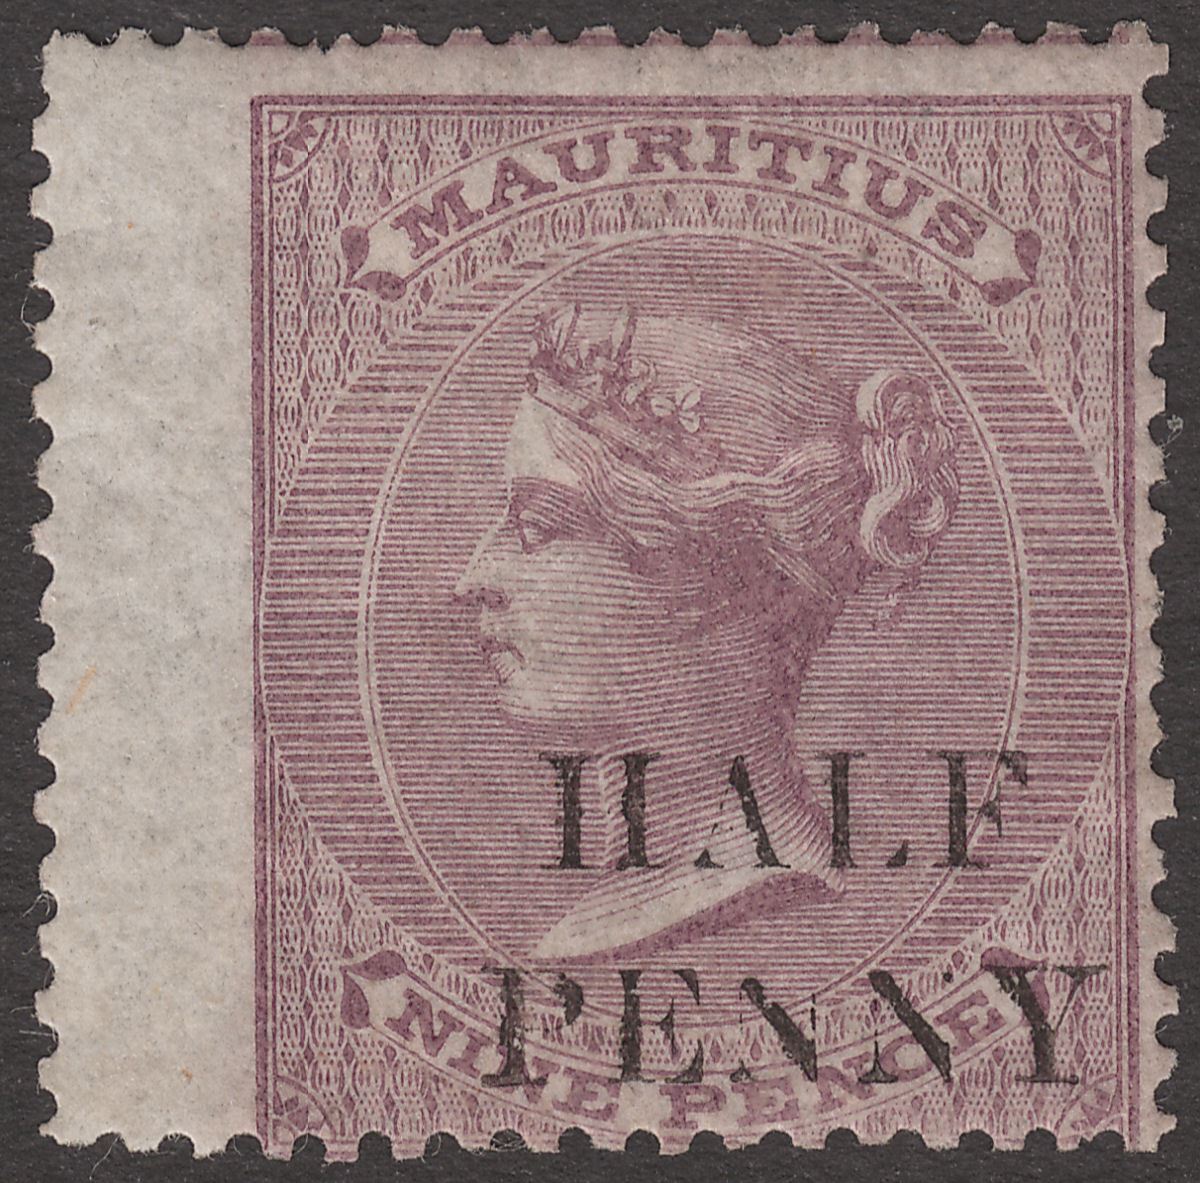 Mauritius 1879 QV ½d Surcharge on 9d Dull Purple Unused SG76 cat £27 as mint